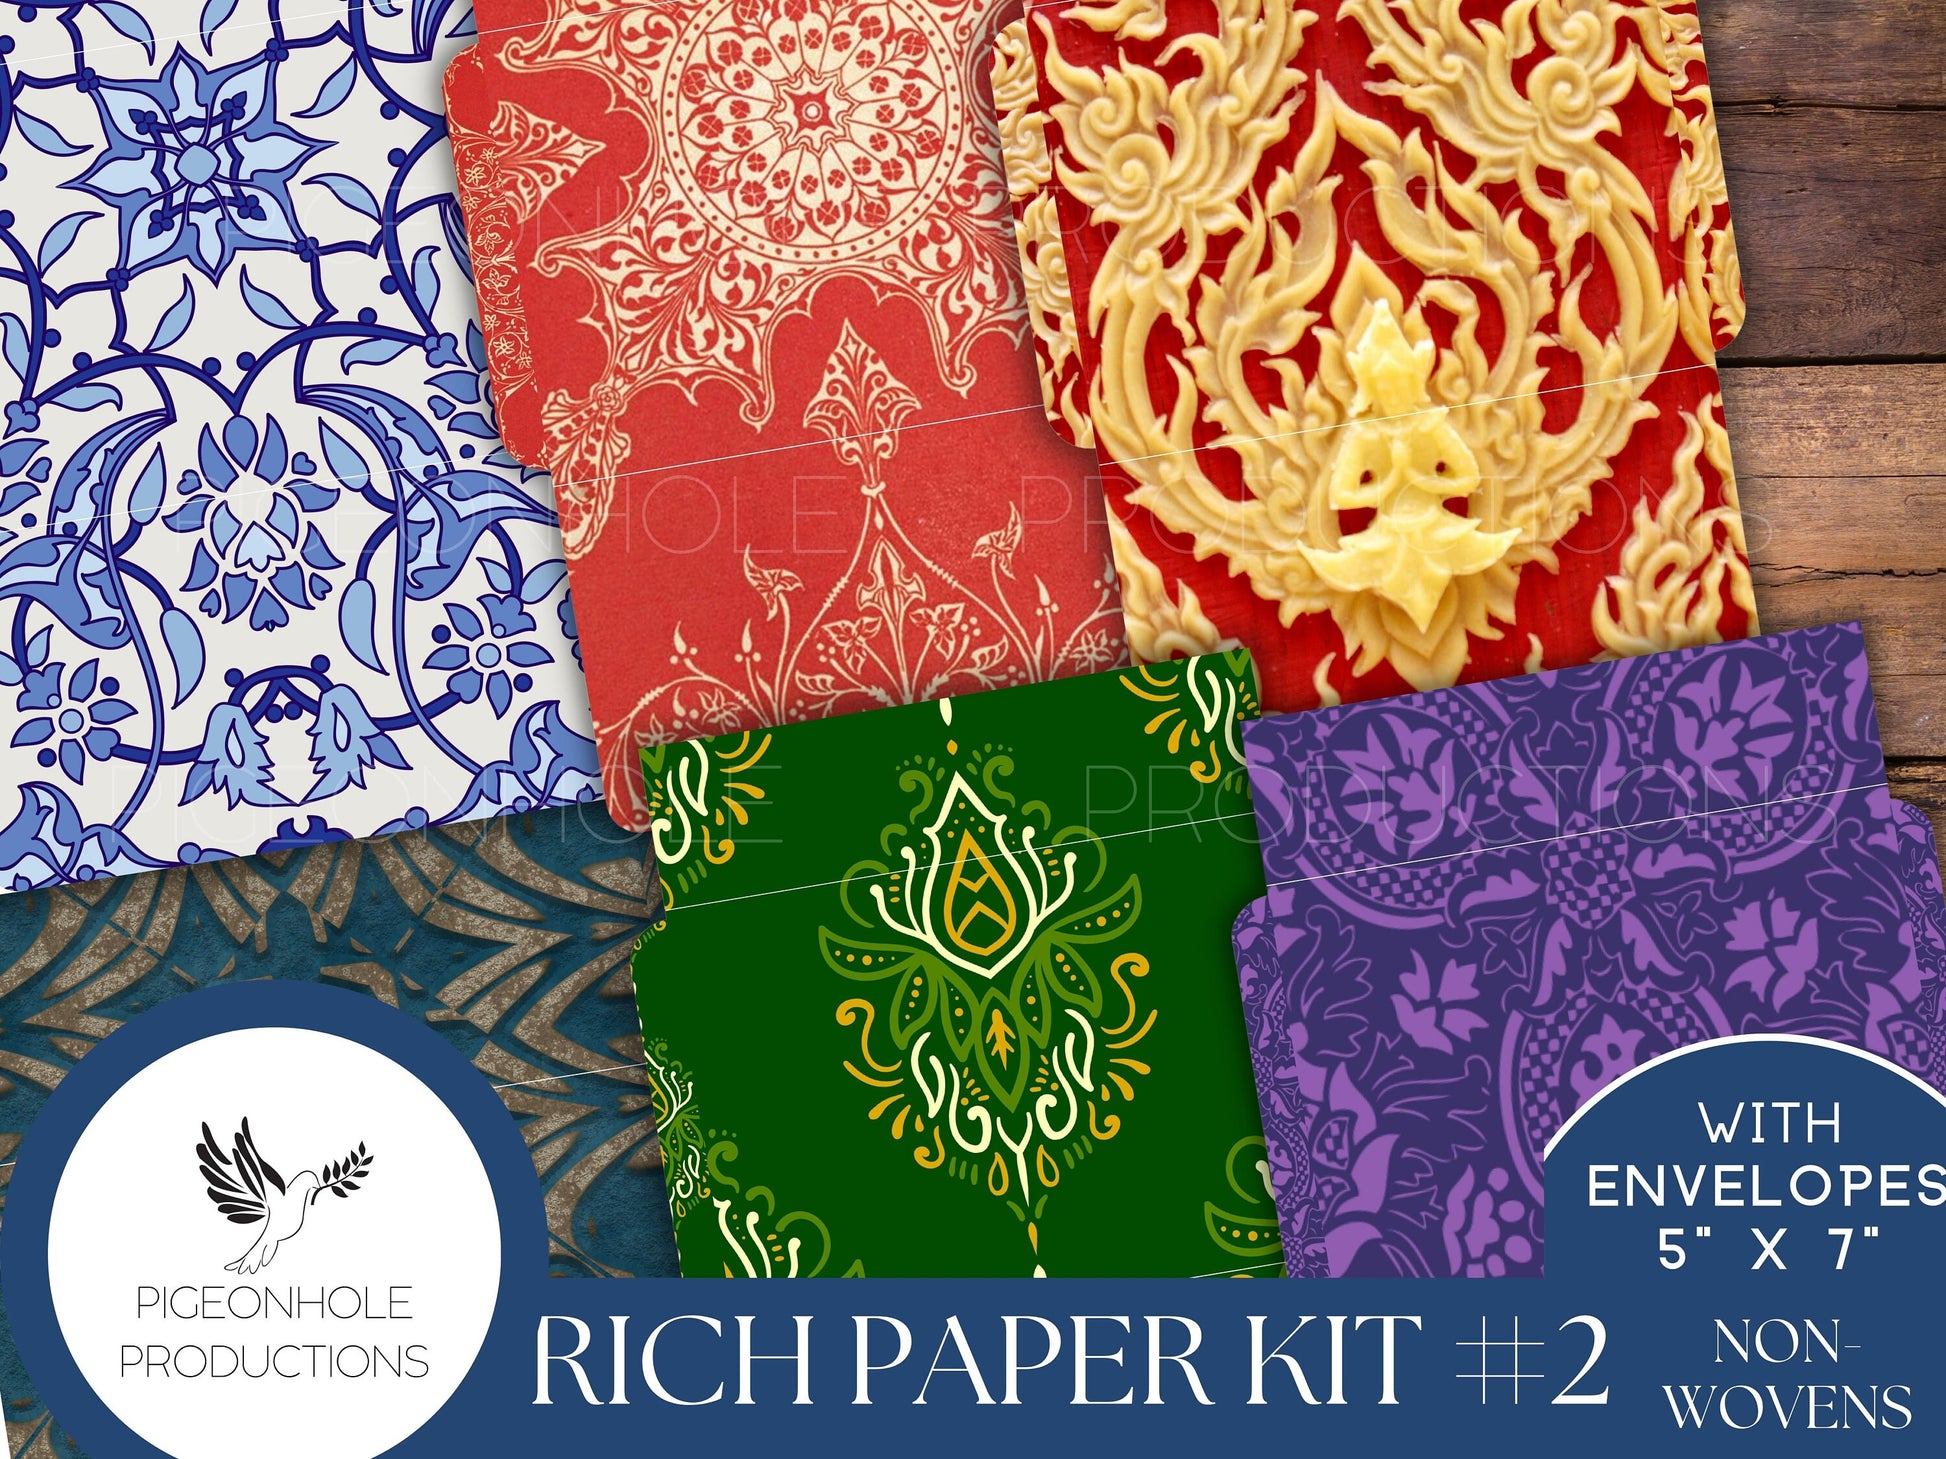 Rich Paper Kit 1 Wovensprintableincludes 5 X 7 Envelopes & Bonus 5